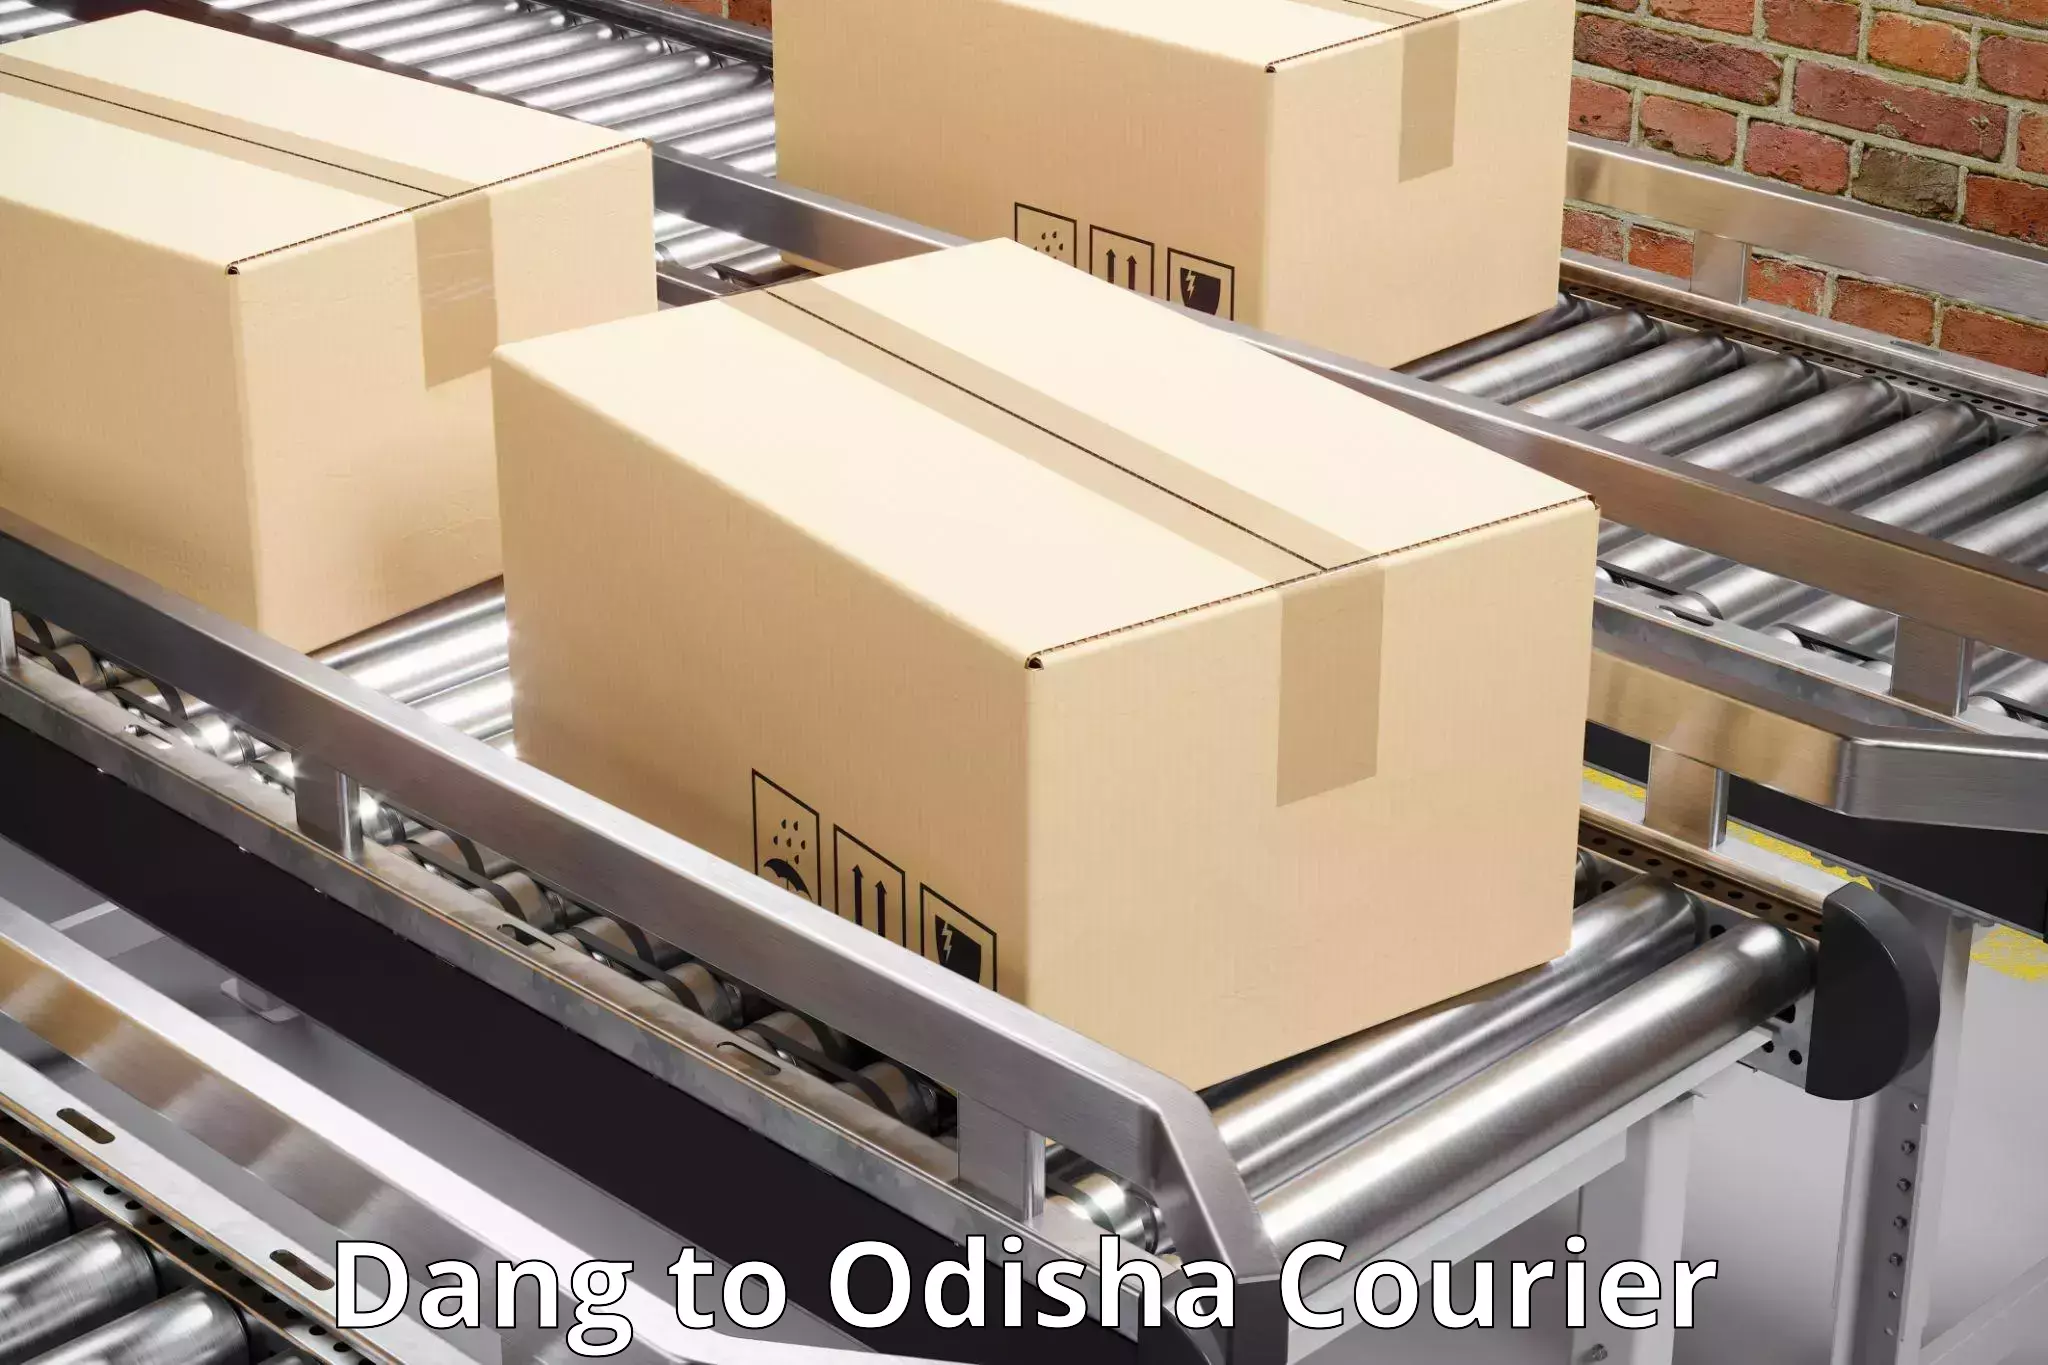 Modern delivery technologies Dang to Odisha